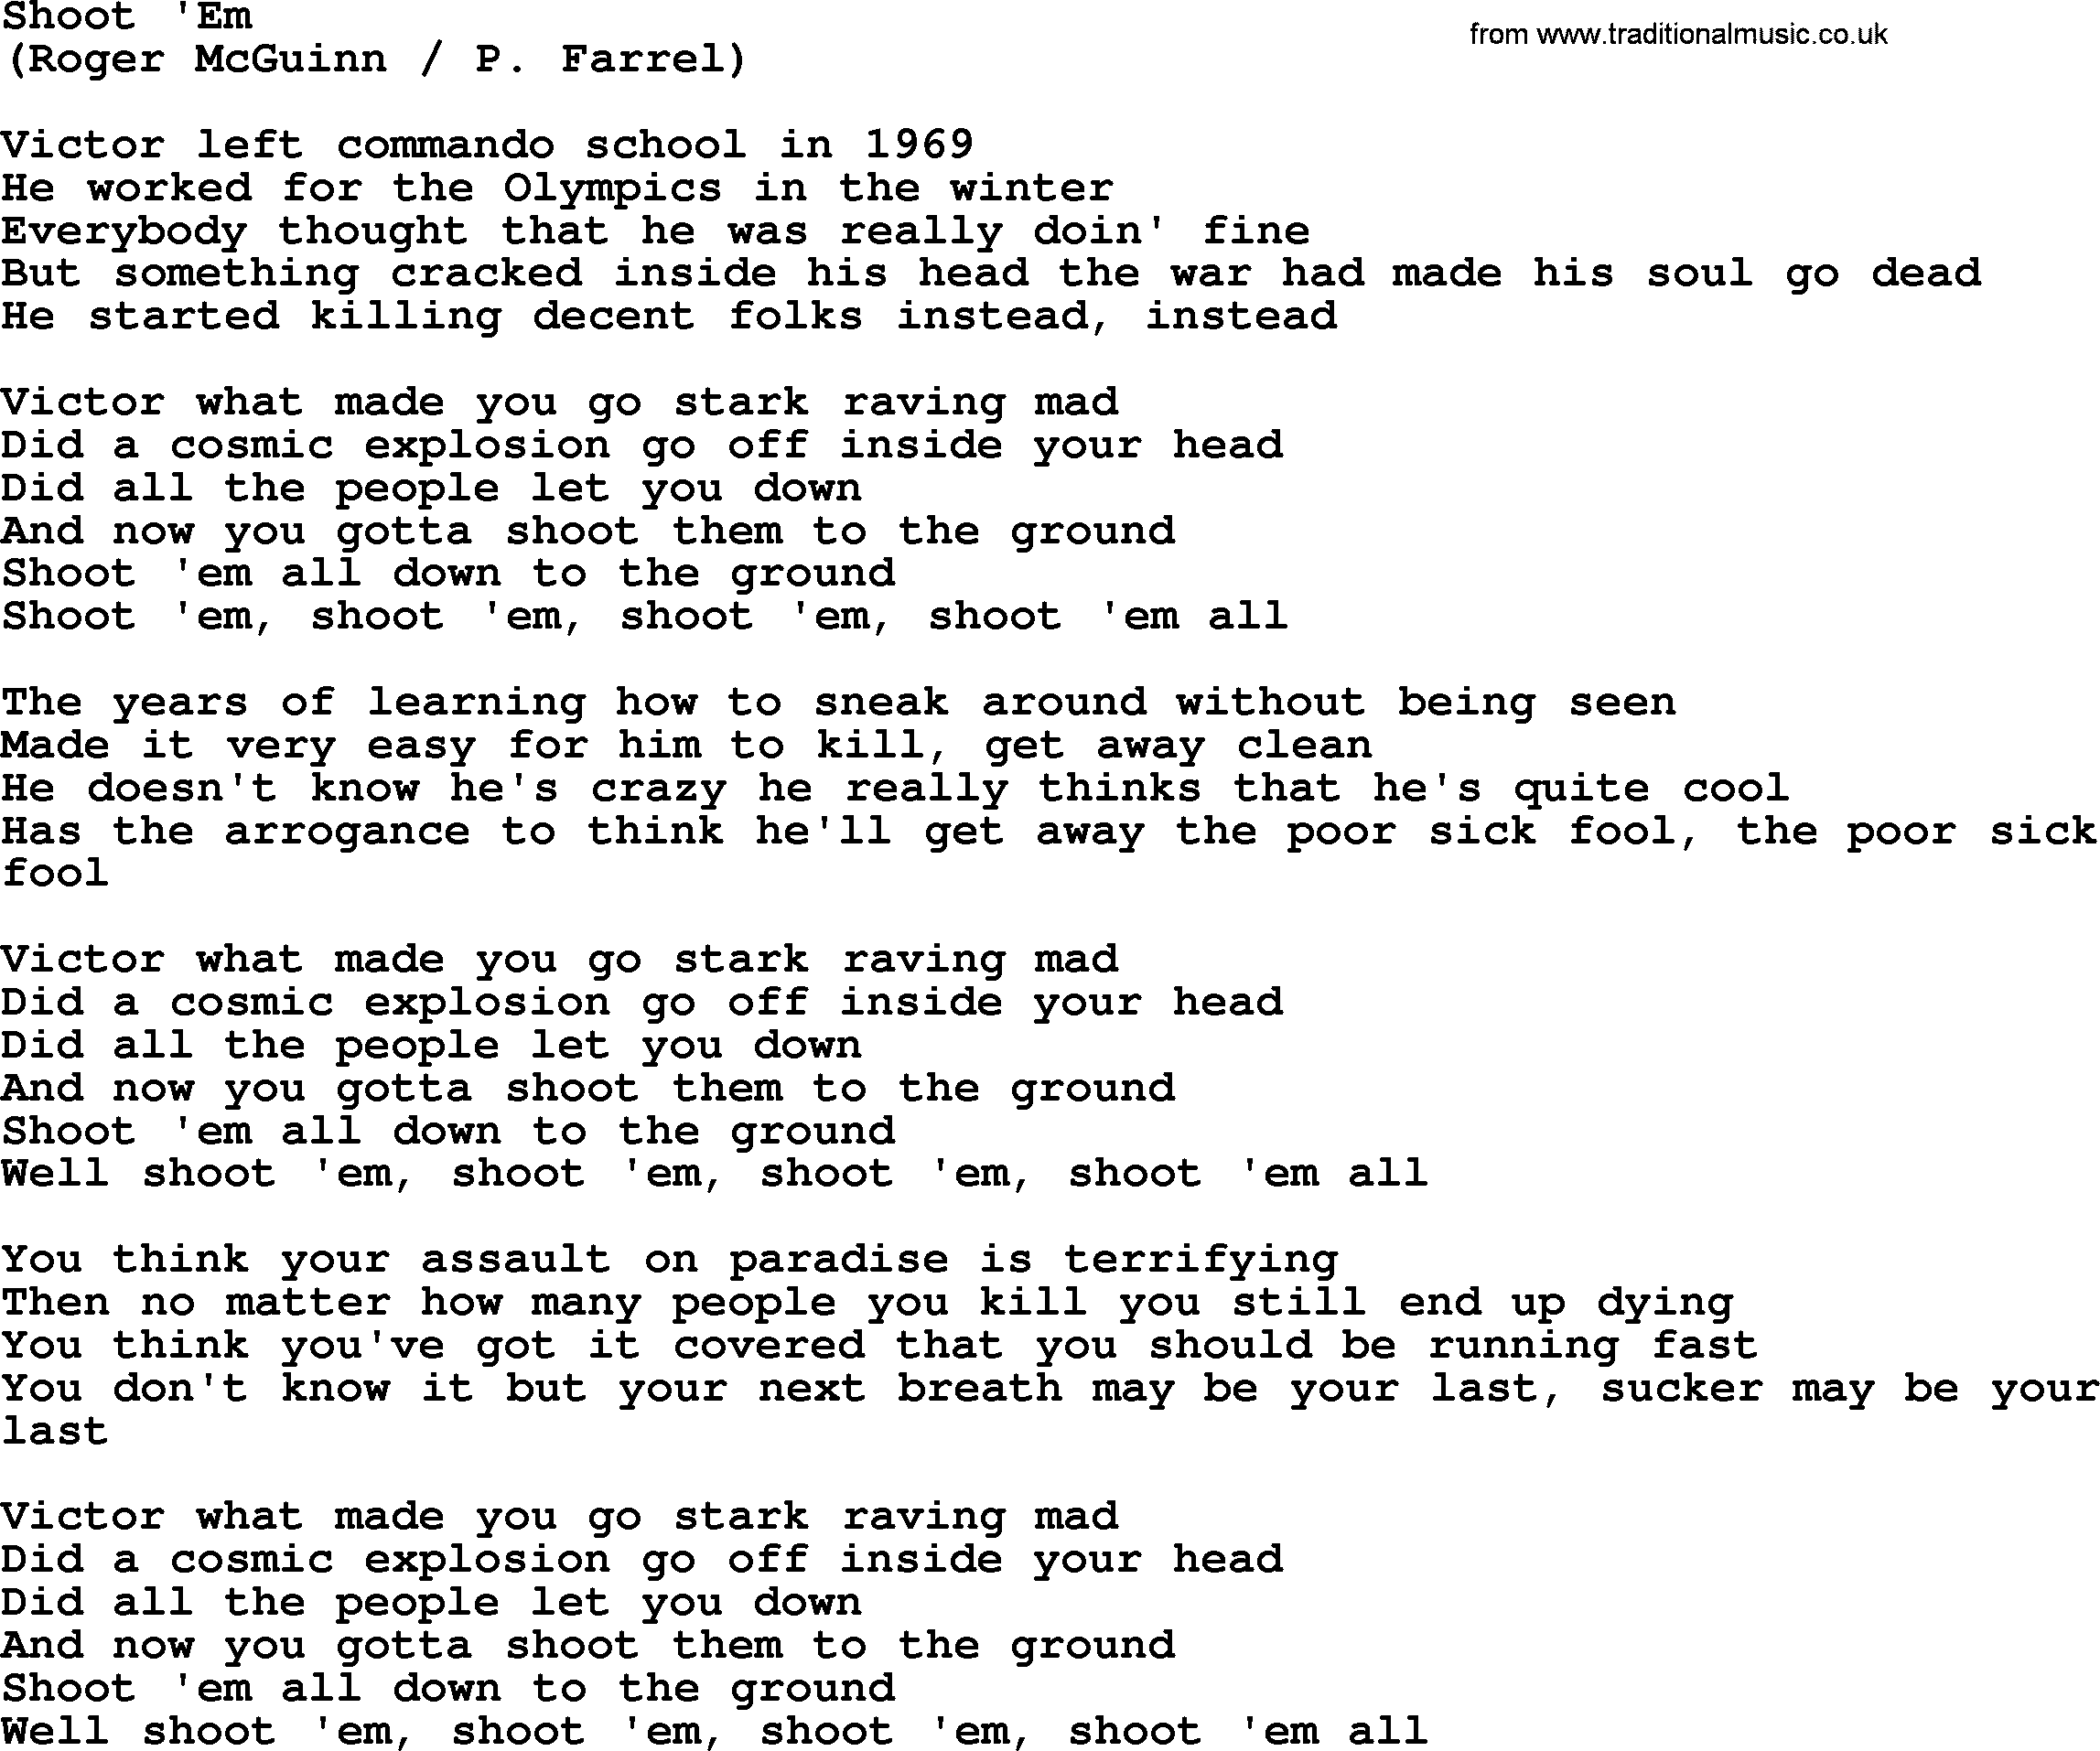 The Byrds song Shoot 'em, lyrics